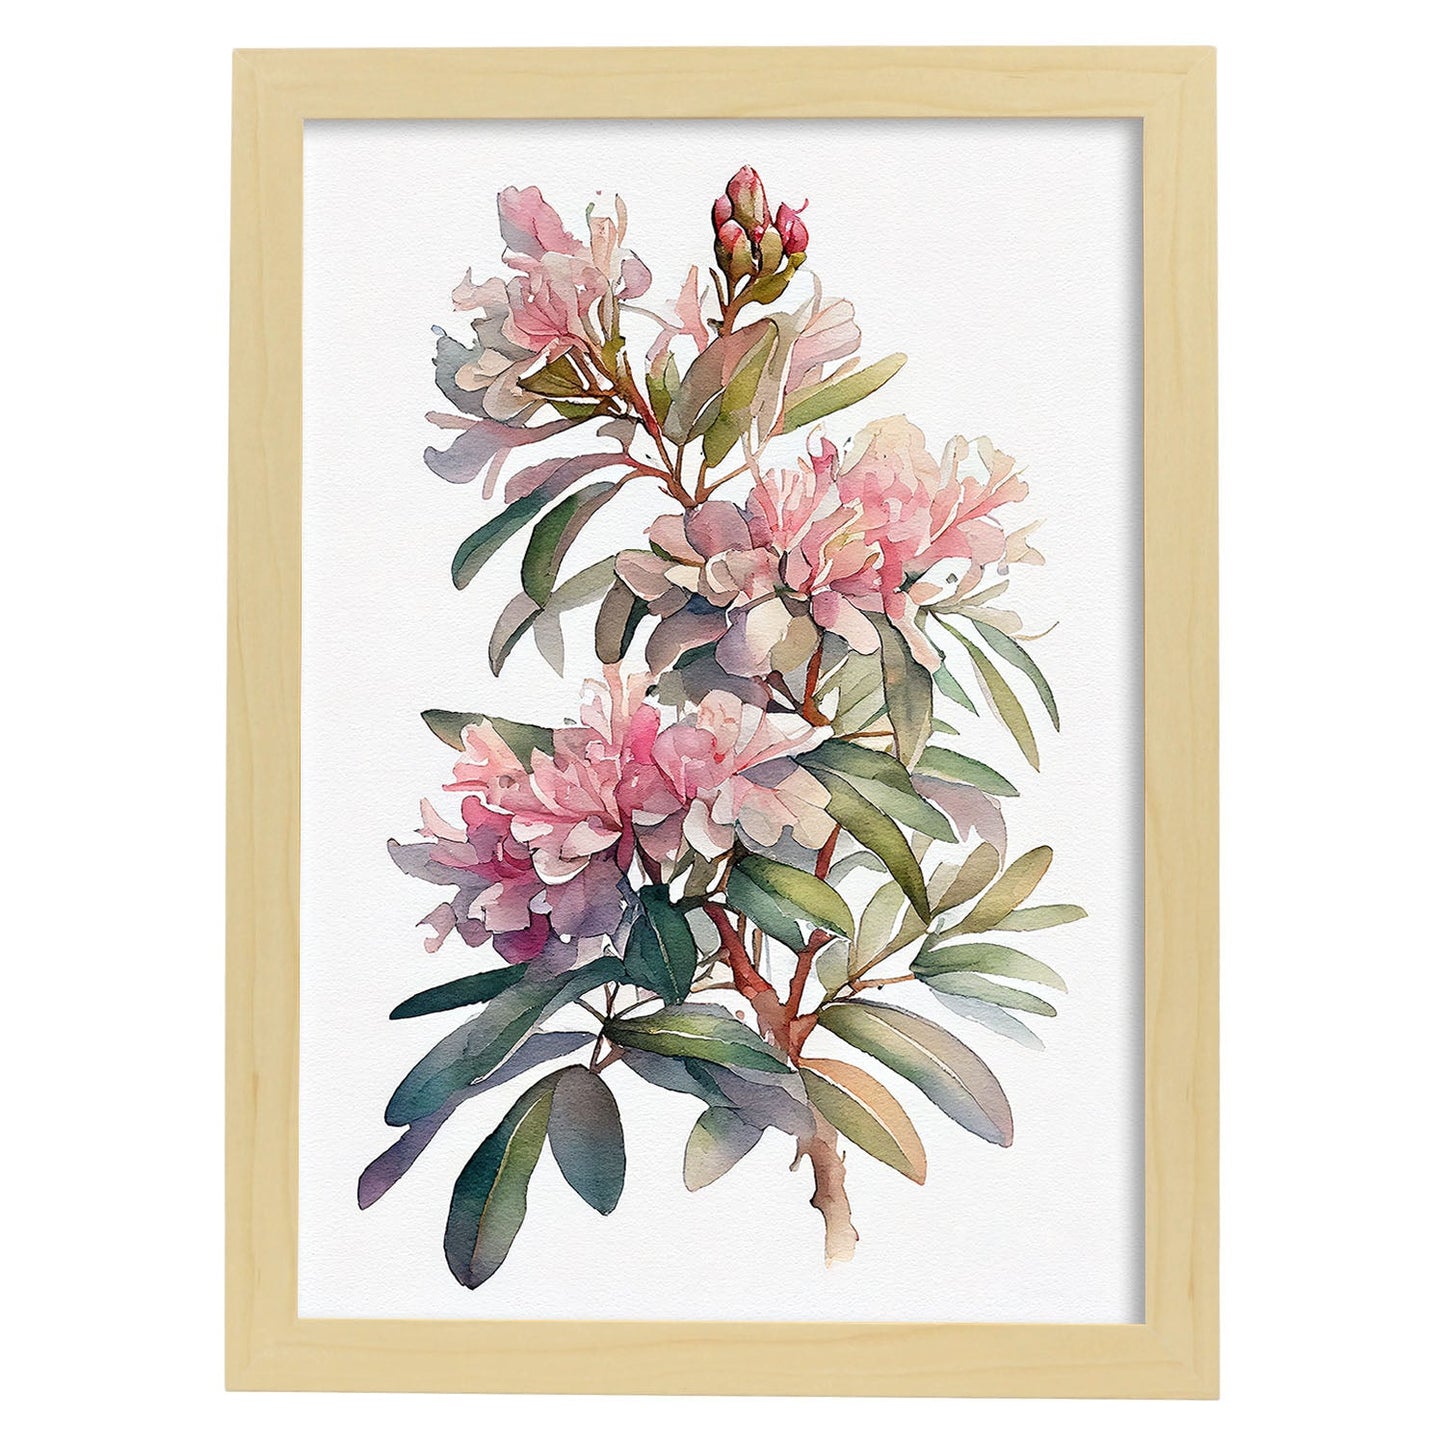 Nacnic watercolor minmal Rhododendron_1. Aesthetic Wall Art Prints for Bedroom or Living Room Design.-Artwork-Nacnic-A4-Marco Madera Clara-Nacnic Estudio SL